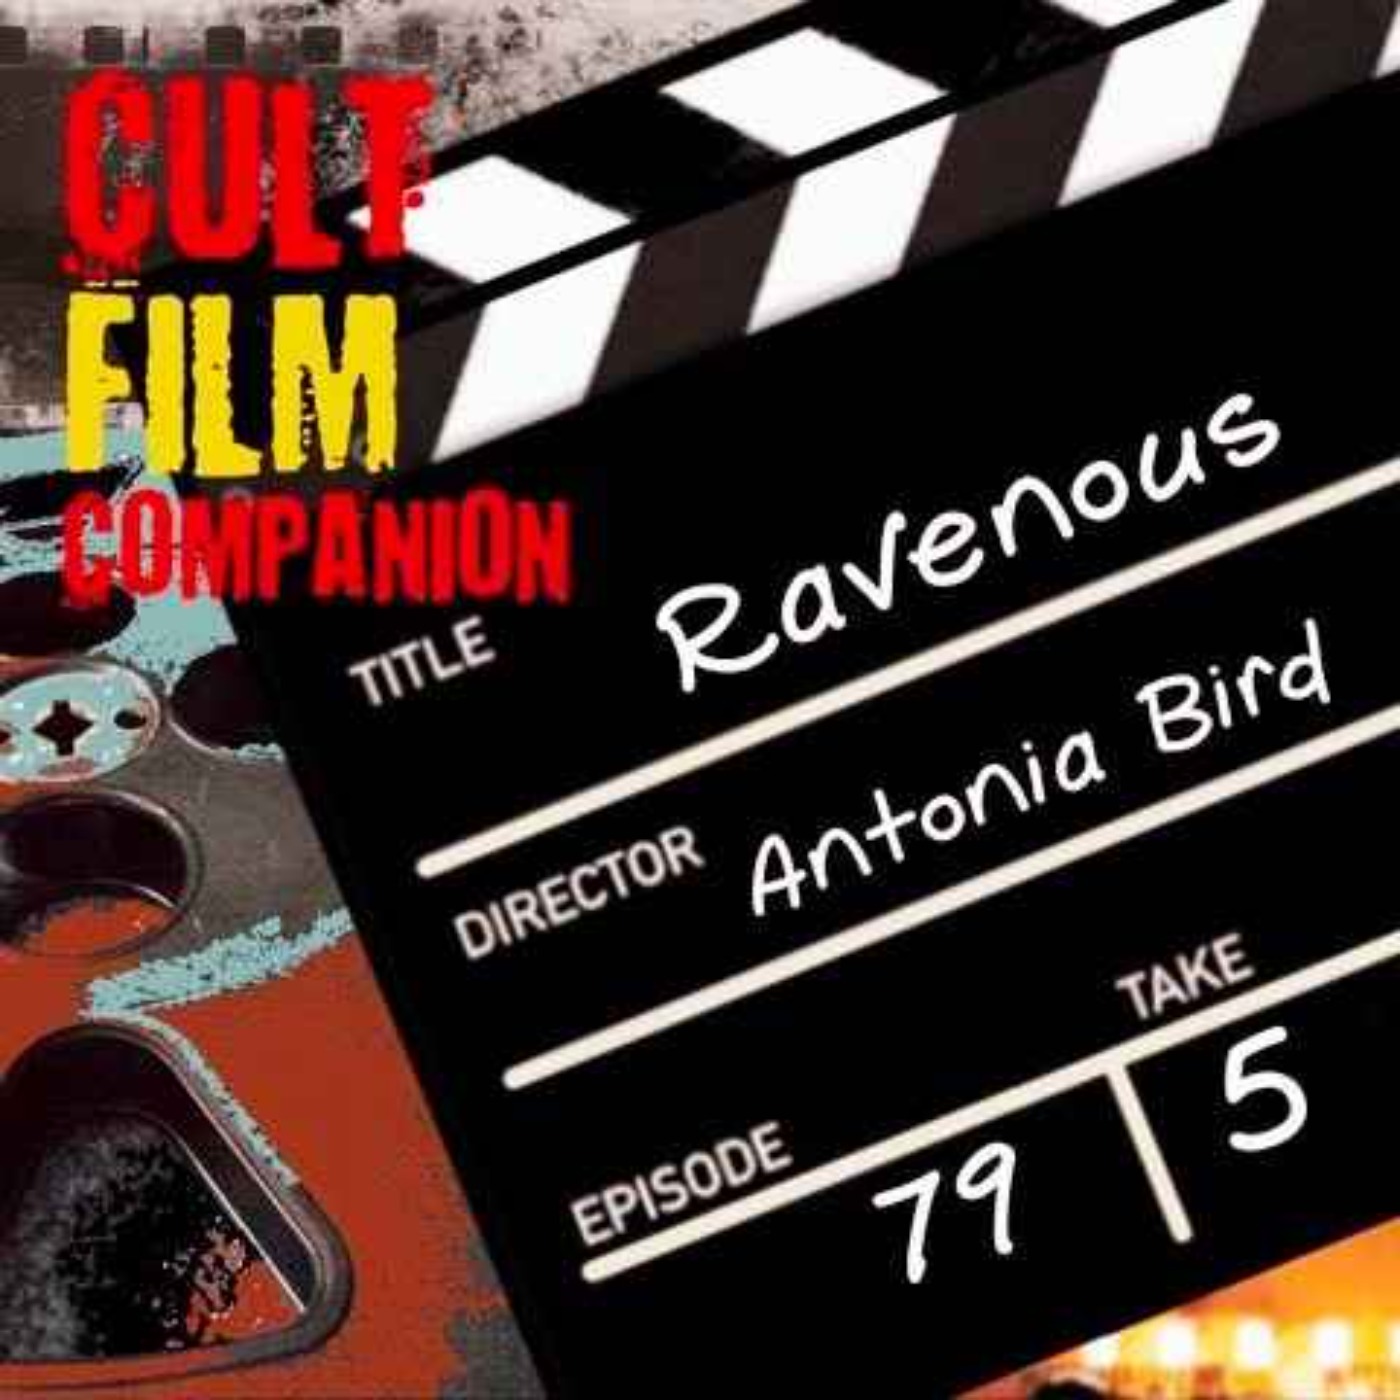 Ep. 79 Ravenous dir. by Antonia Bird